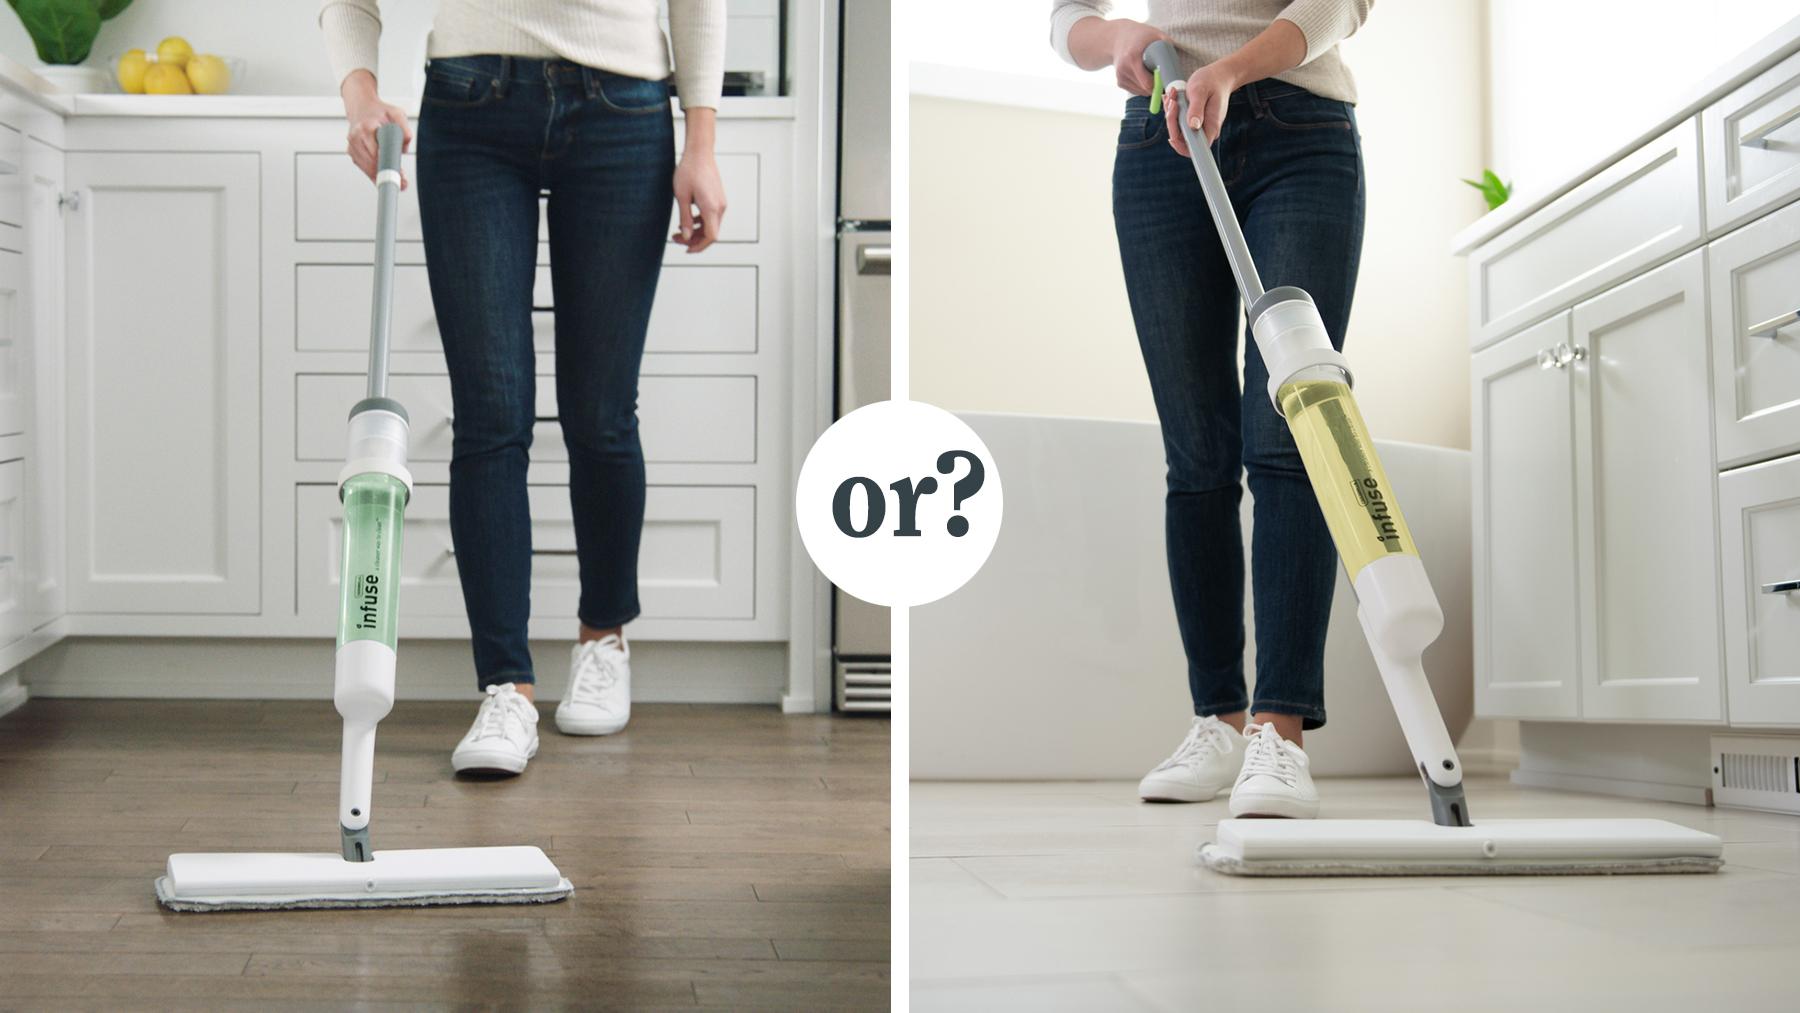 Choosing the right floor cleaner.